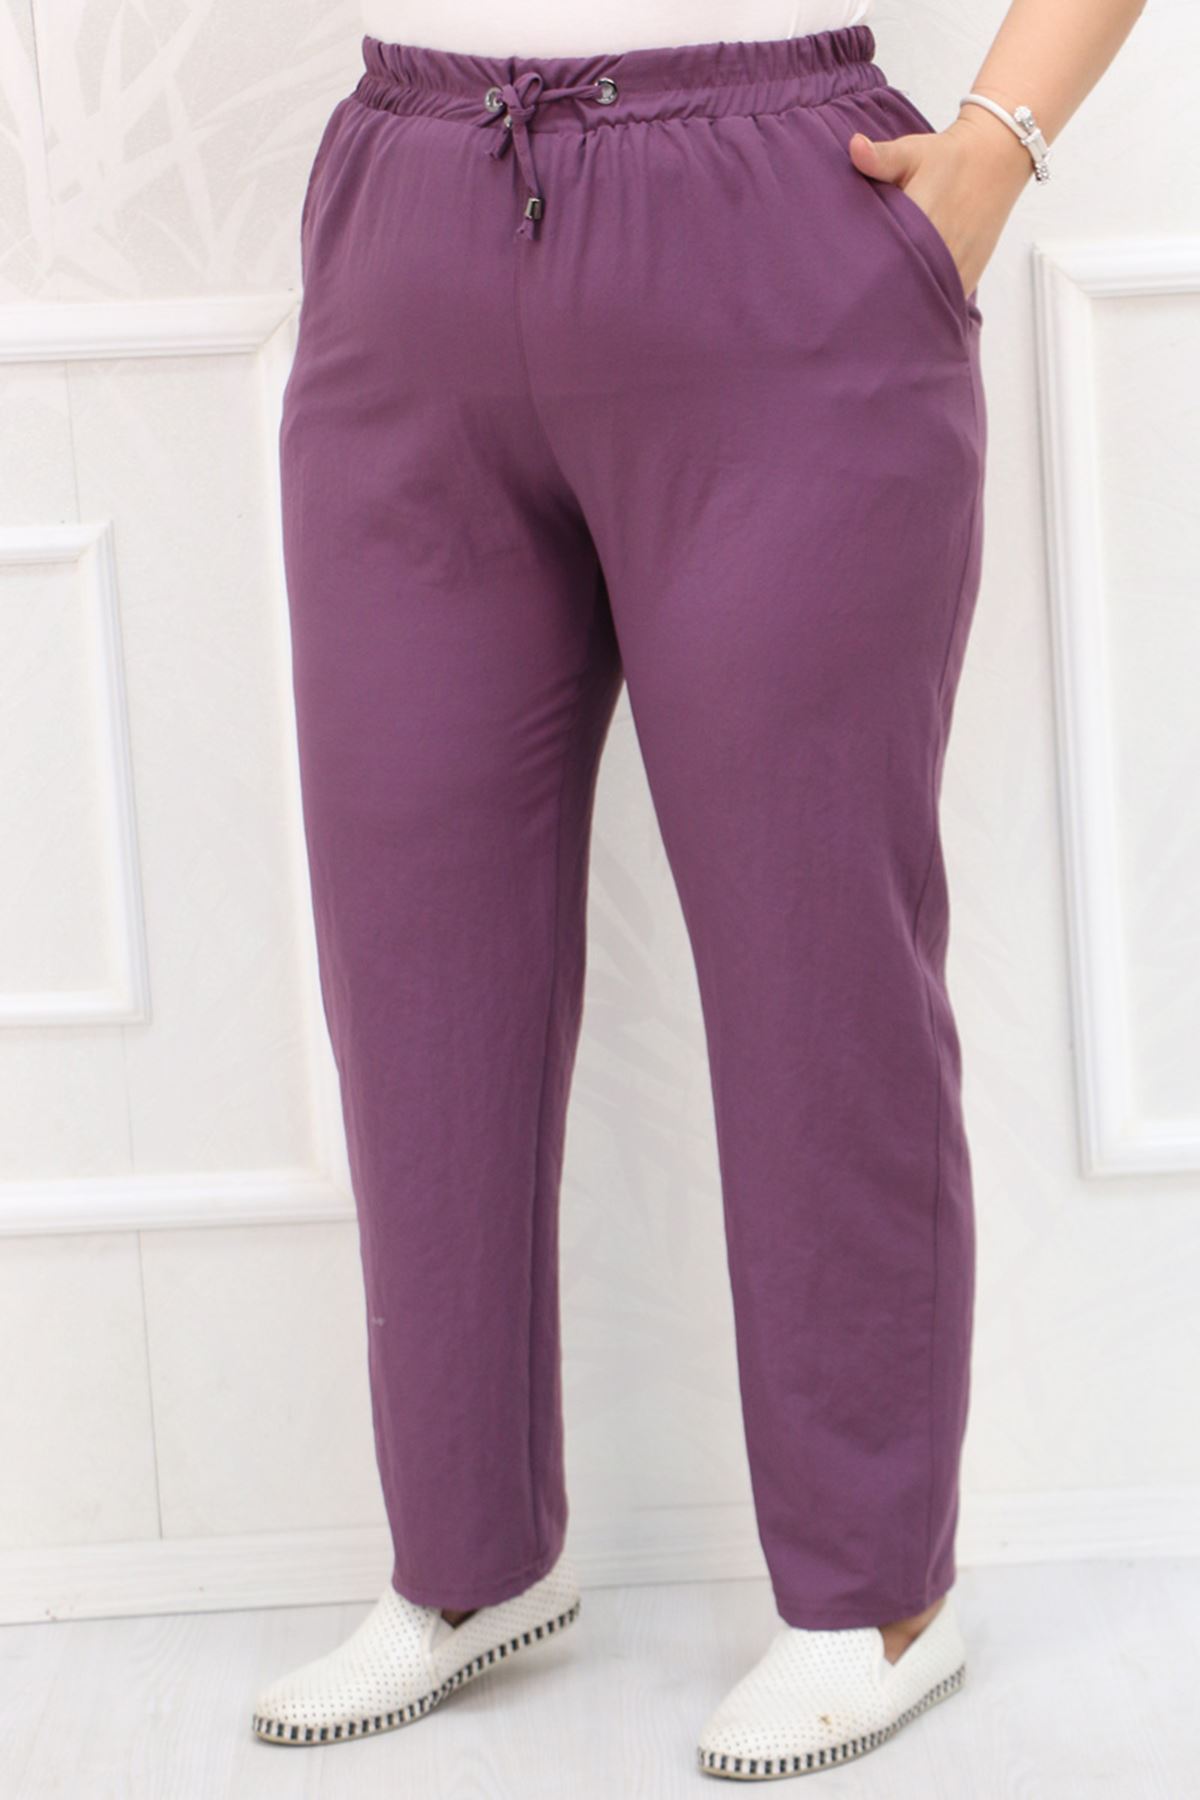 39024 Large Size Star Airobin Slim Leg Pants With Elastic Waist -Lilac